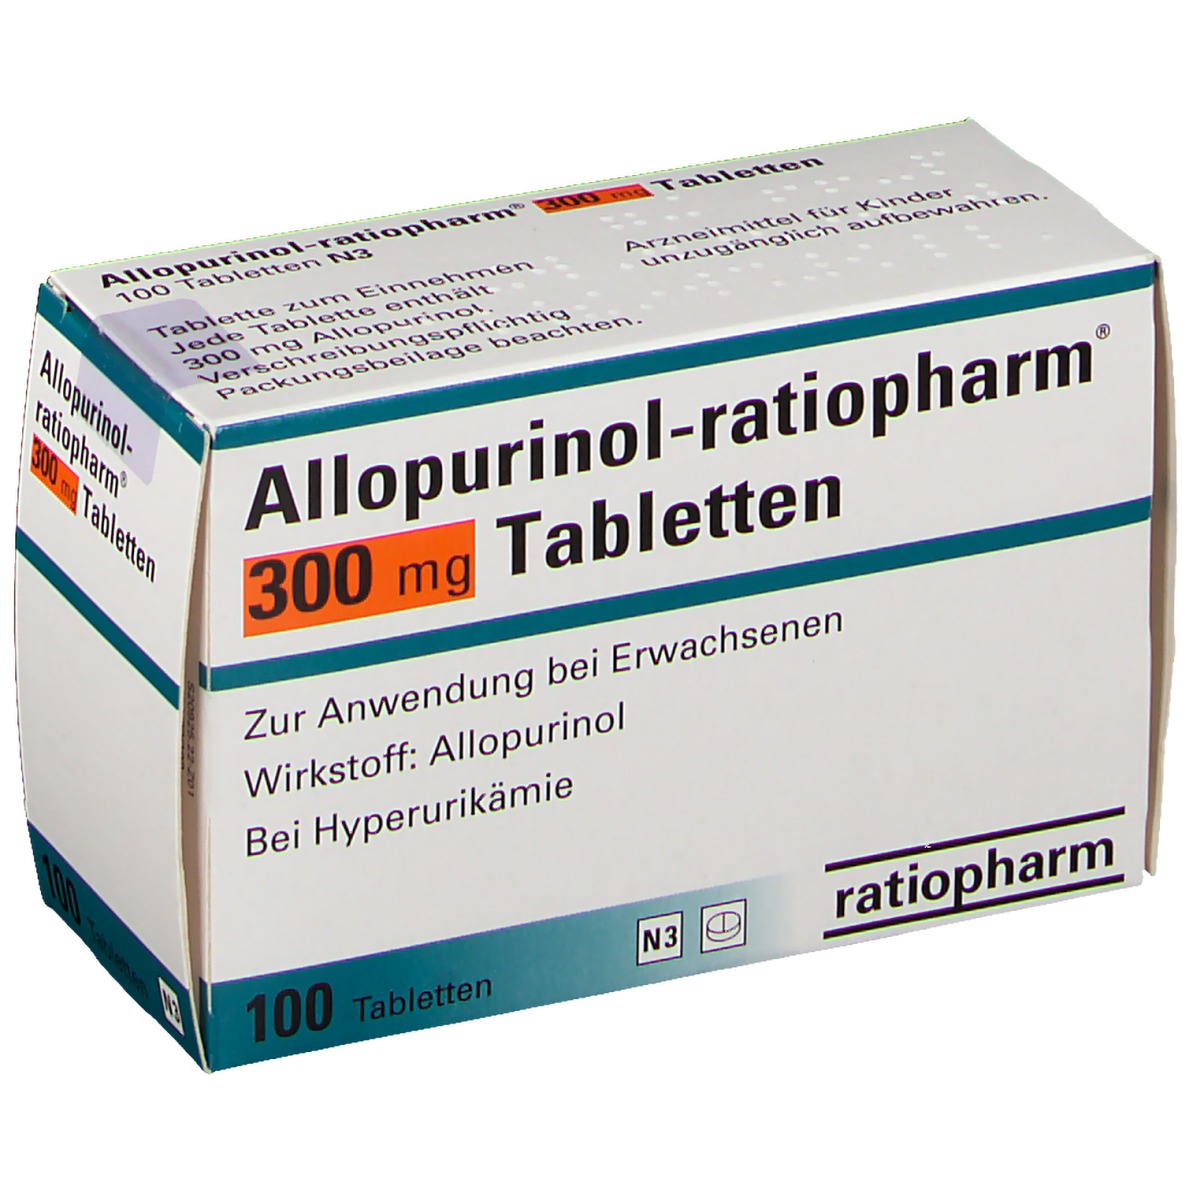 what is allopurinol 300 mg